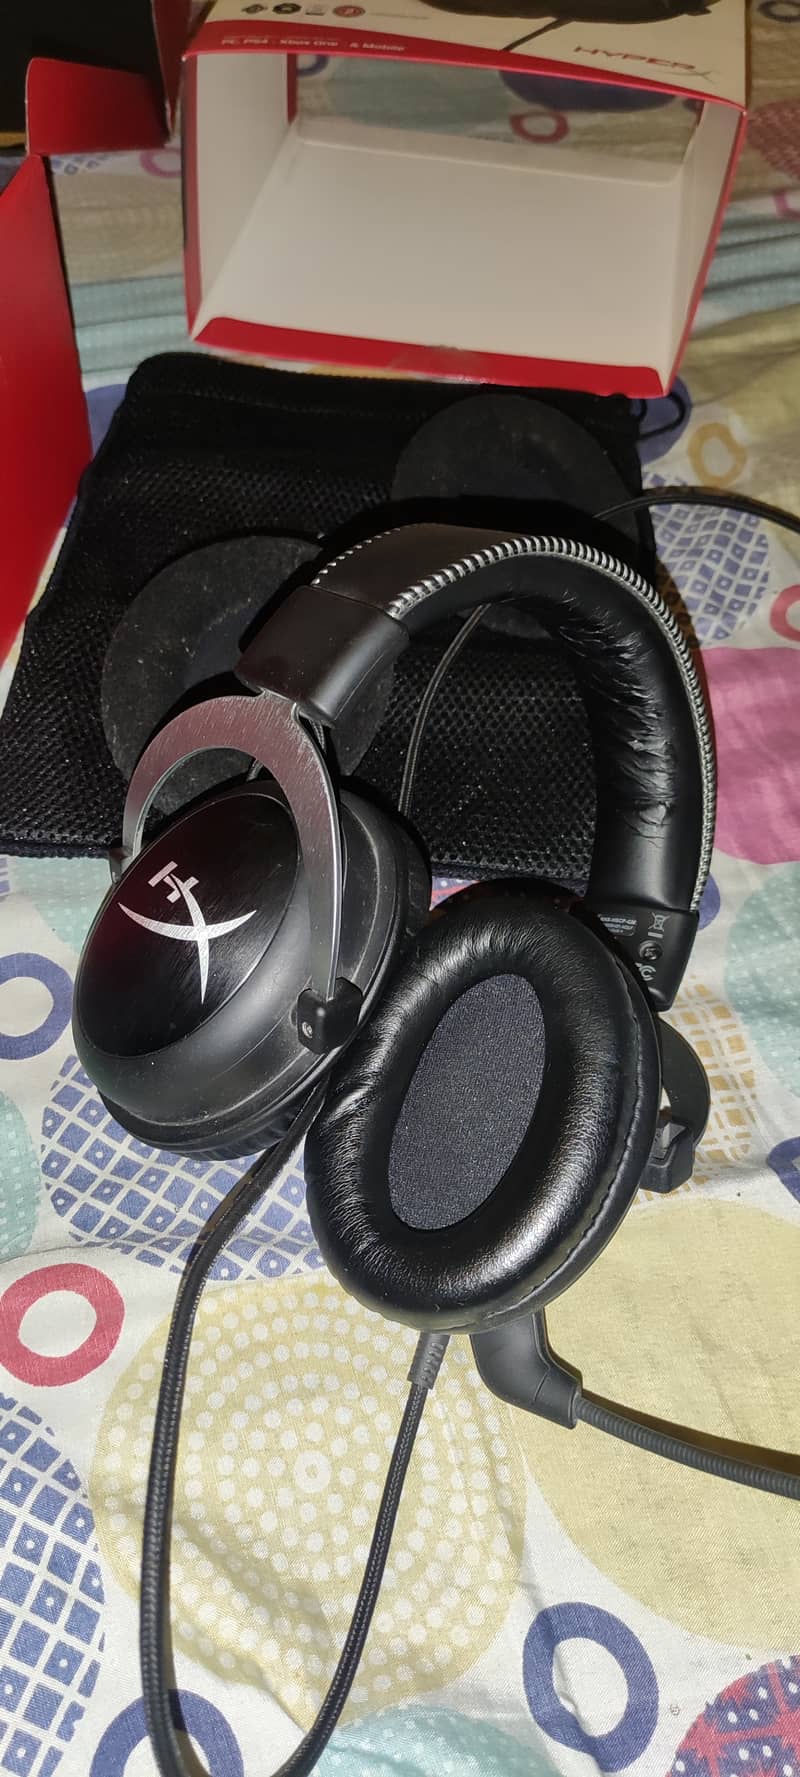 Hyper x cloud 2 gaming headphones  black colour ultra clear footsteps 5